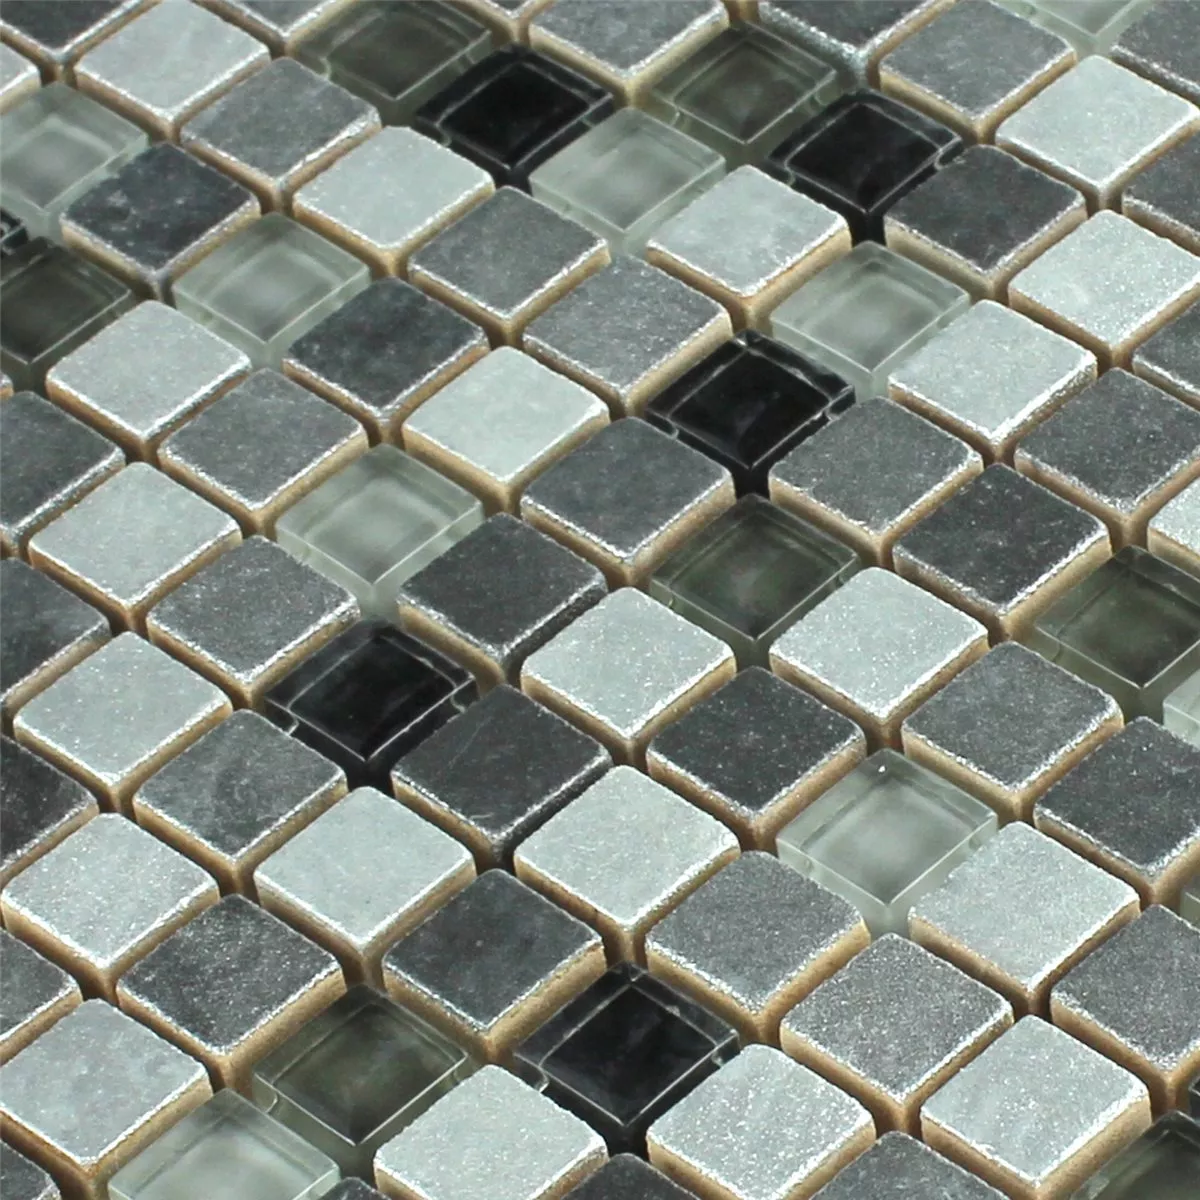 Sample Mosaic Tiles Glass Natural Stone Mix